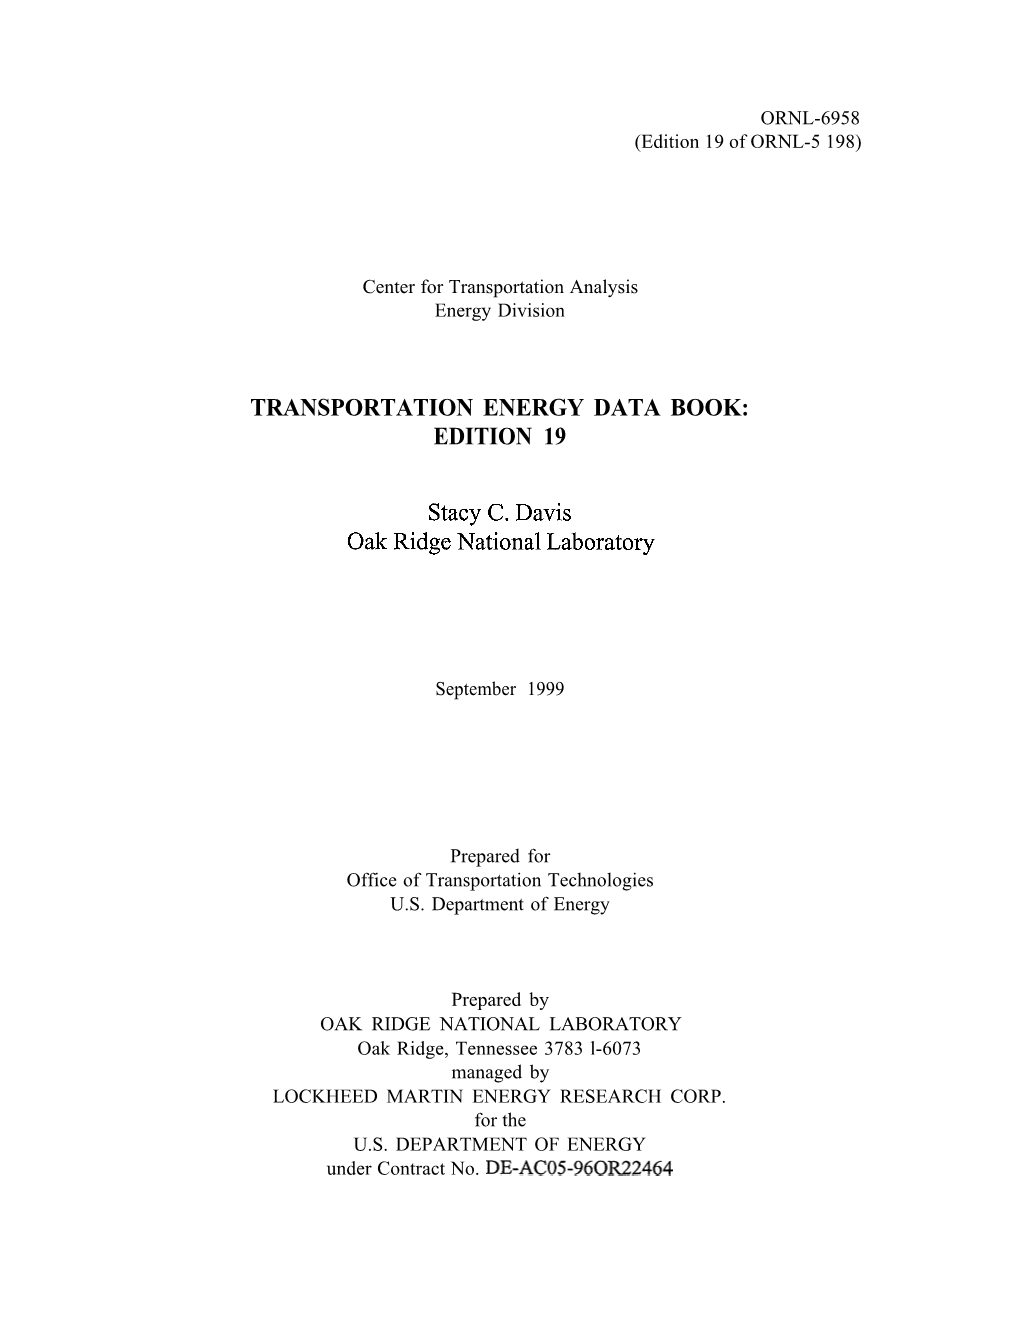 TRANSPORTATION ENERGY DATA BOOK: EDITION 19 Stacy C. Davis Oak Ridge National Laboratory